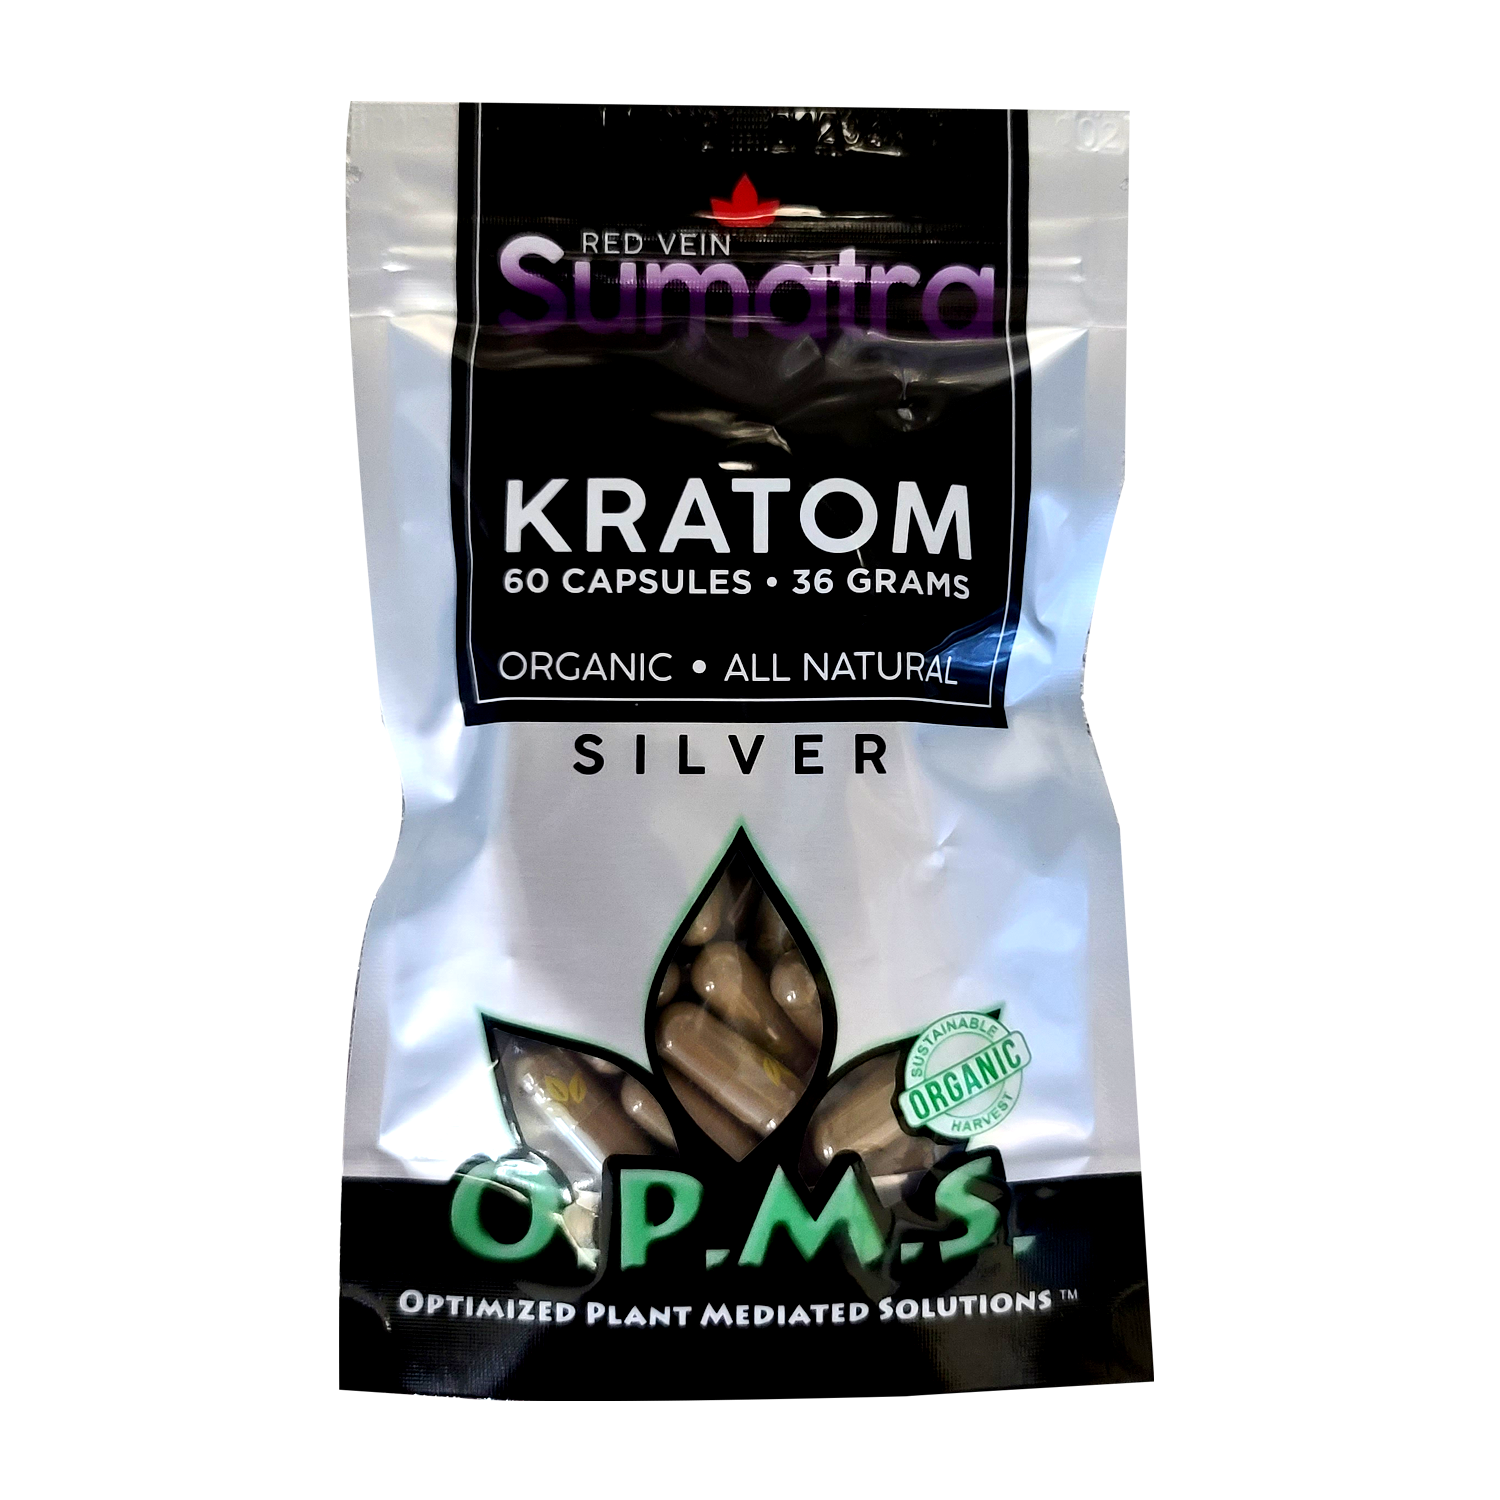 60ct OPMS Silver Red Vein Sumatra Kratom Extract Capsules